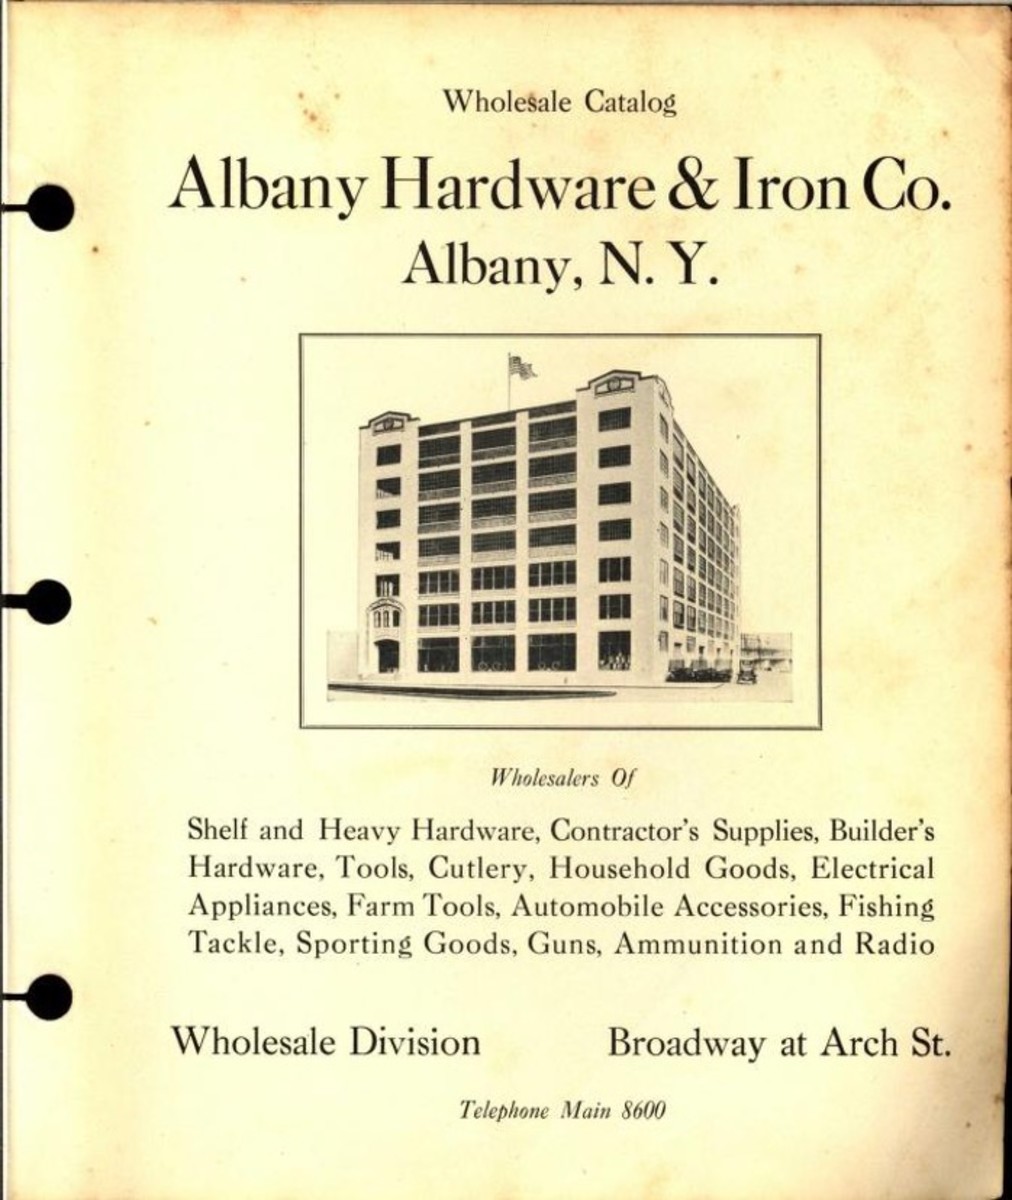 Wholesale Catalog, 1927.